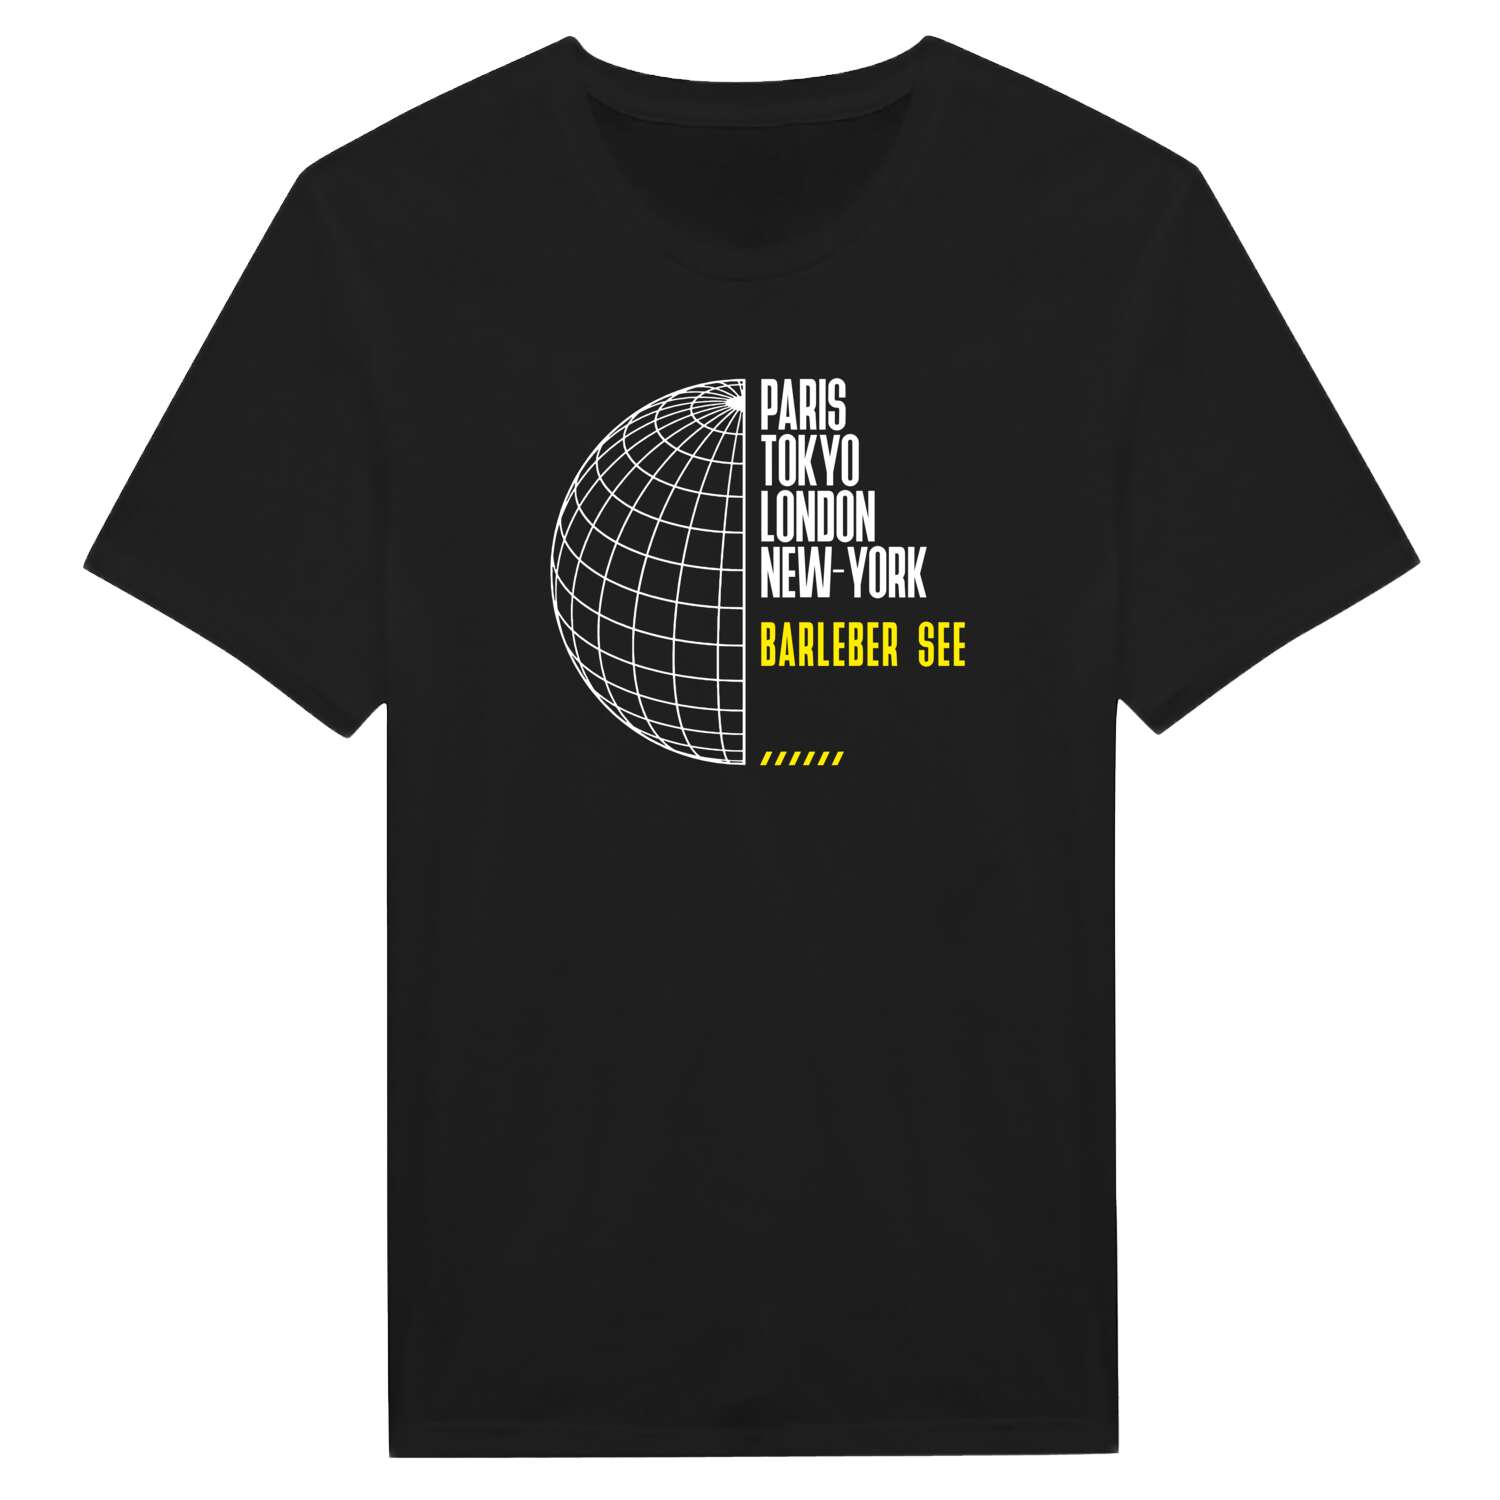 Barleber See T-Shirt »Paris Tokyo London«